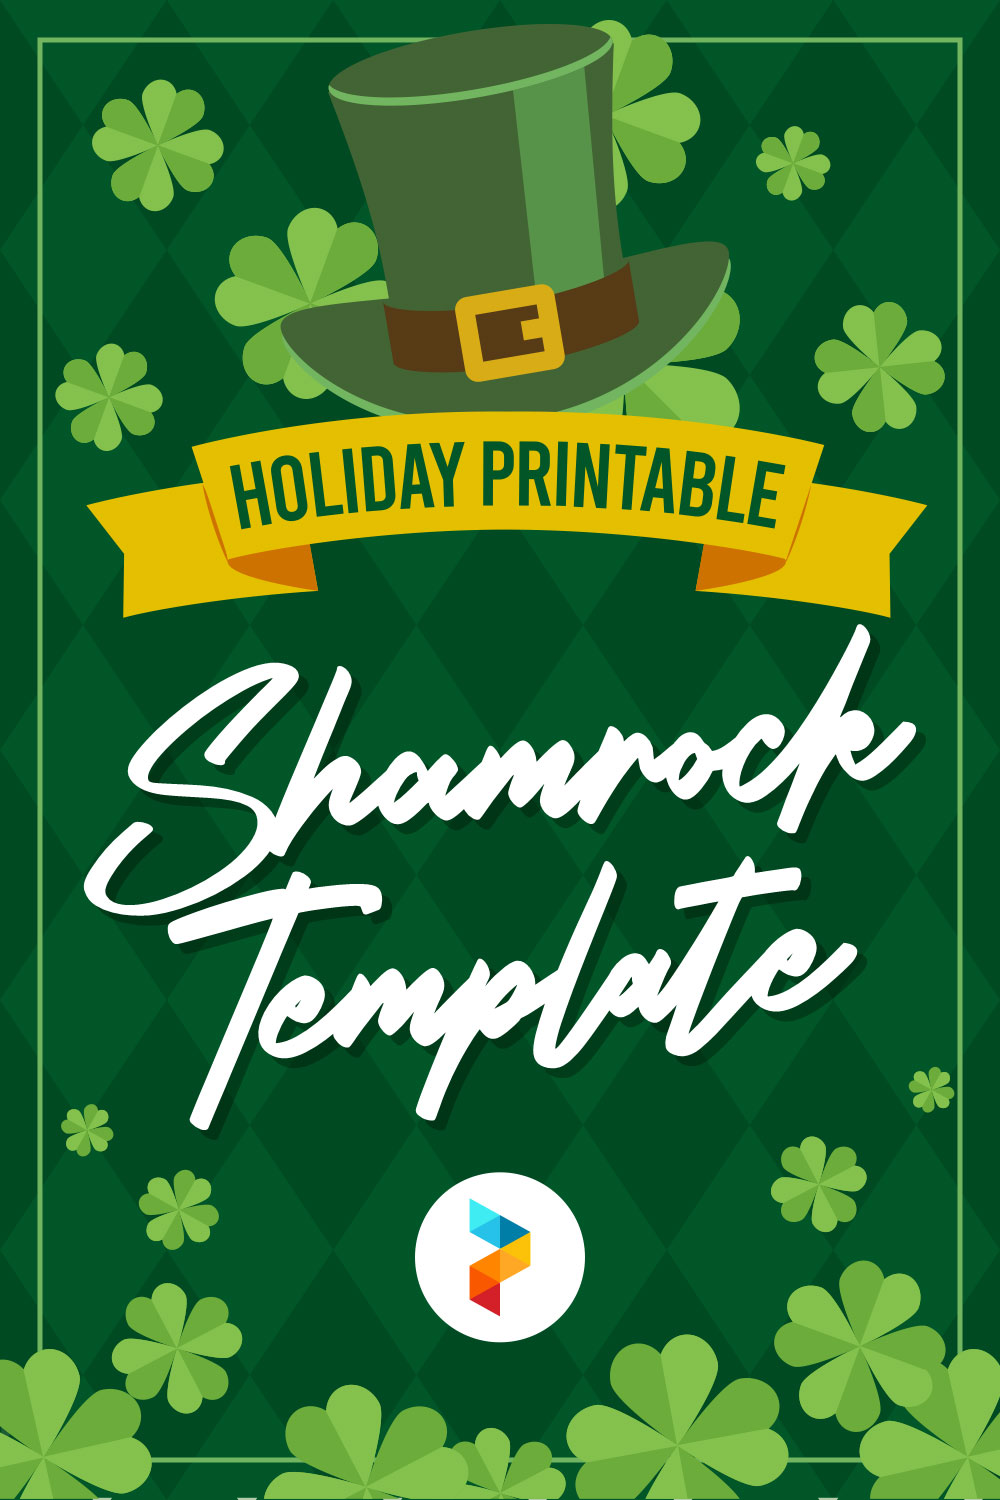 Holiday Printable Shamrock Template